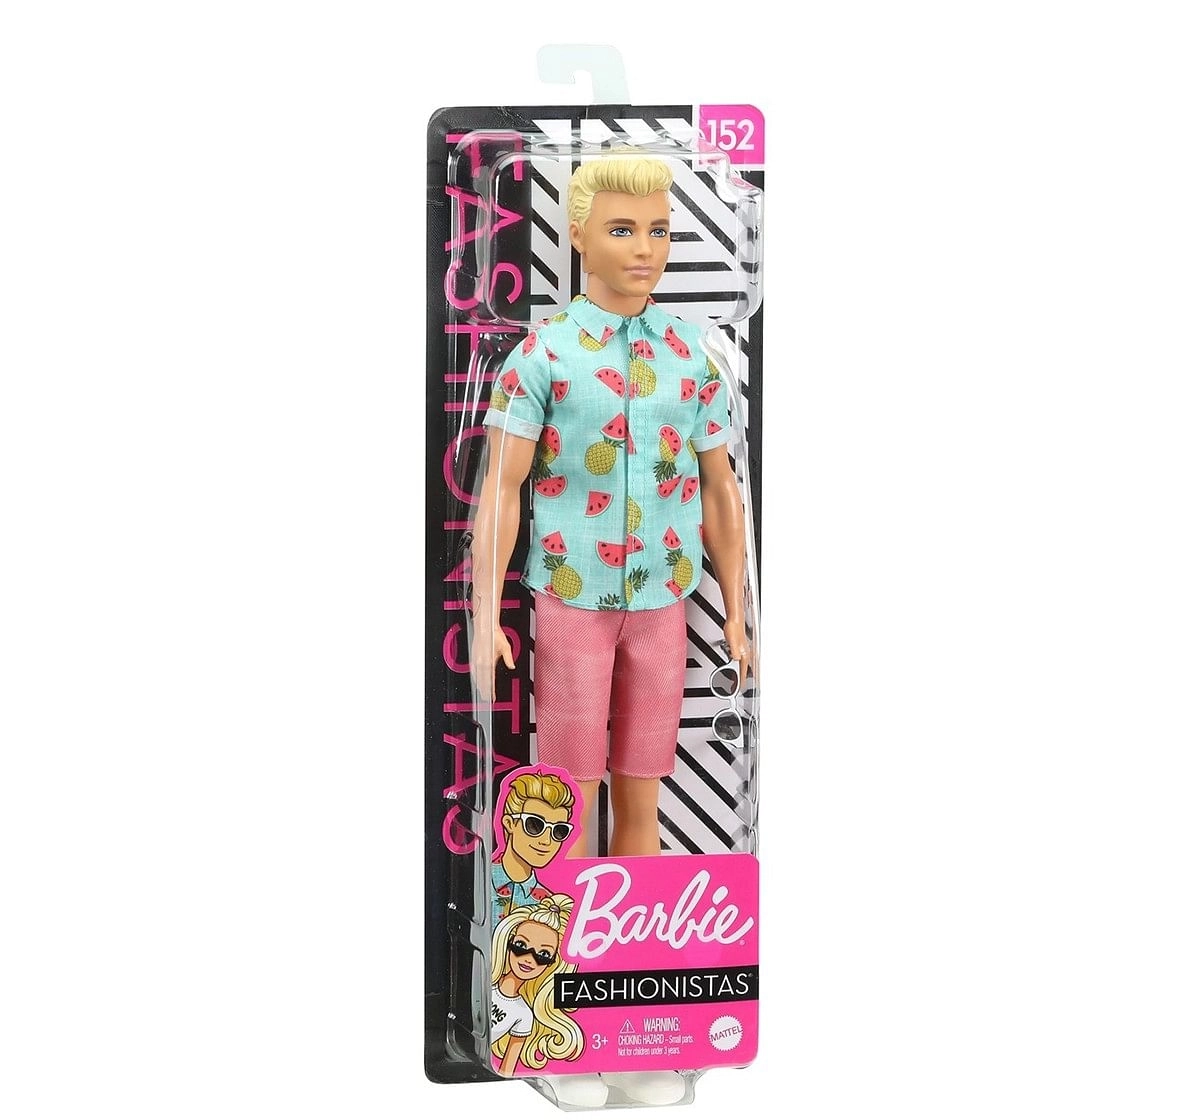 Barbie Ken Fashionistas Doll Assorted Dolls & Accessories for Girls age 3Y+ 